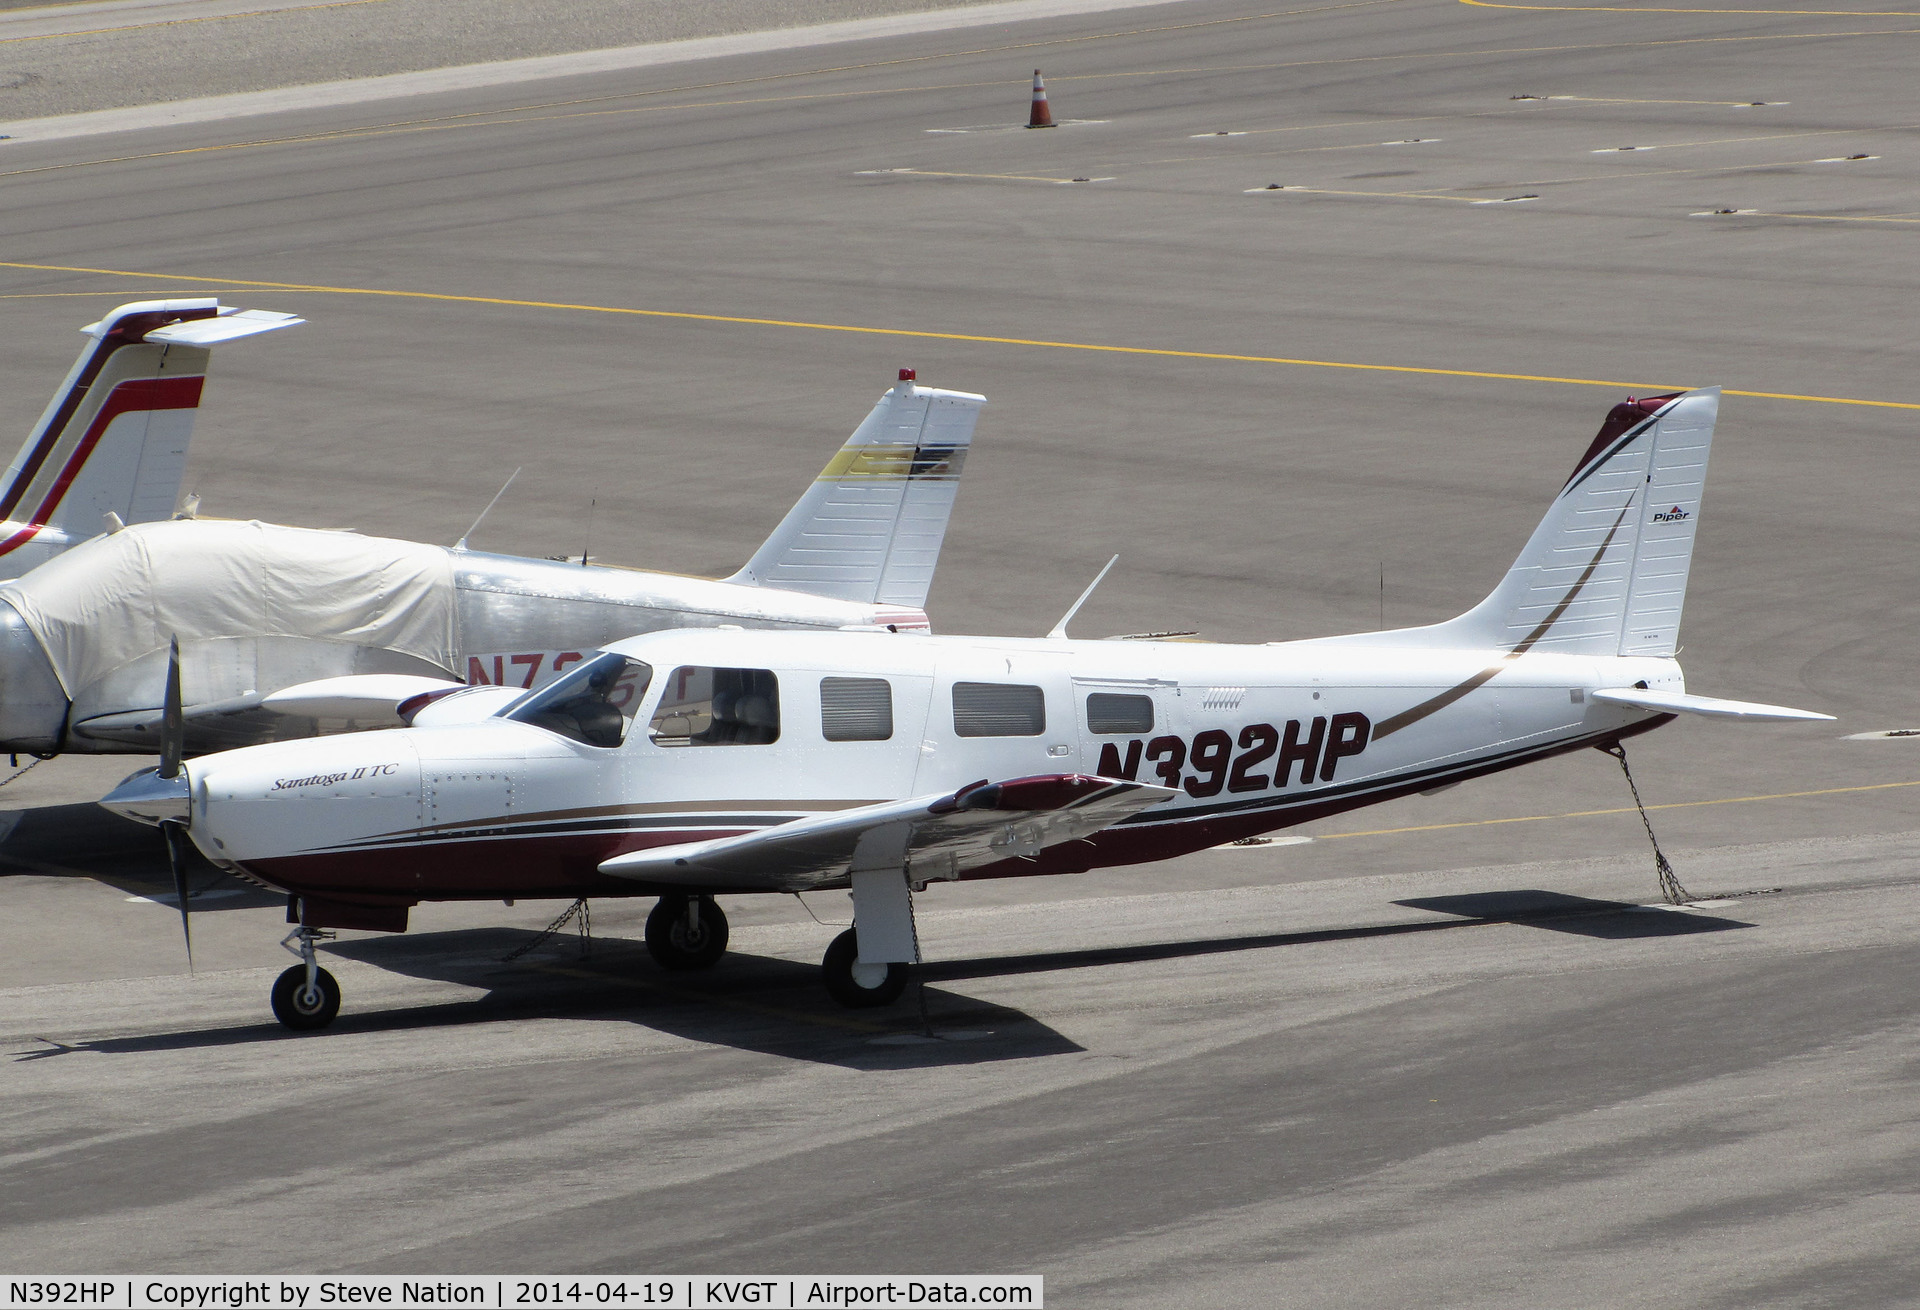 N392HP, 2005 Piper PA-32R-301T Turbo Saratoga C/N 3257387, Washington State-based PA-32R-301T @ North Las Vegas Airport, NV